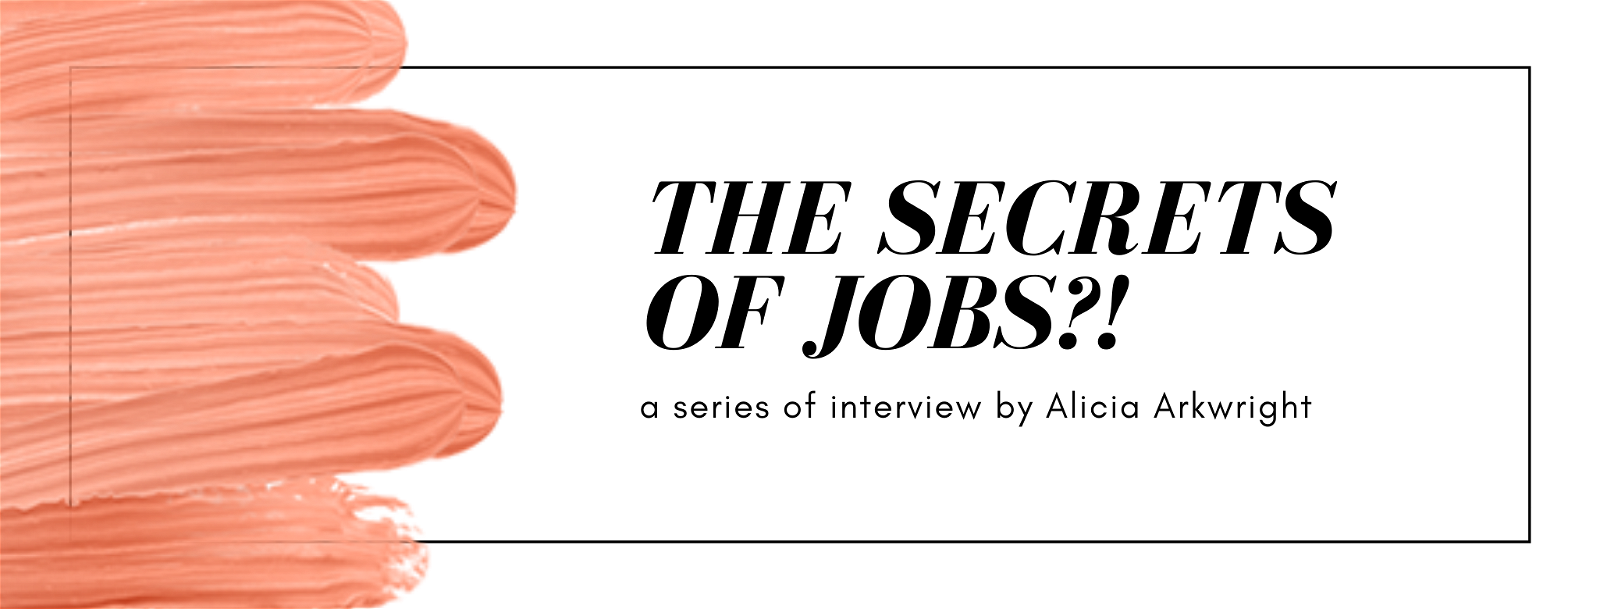 The Secrets of Jobs #1